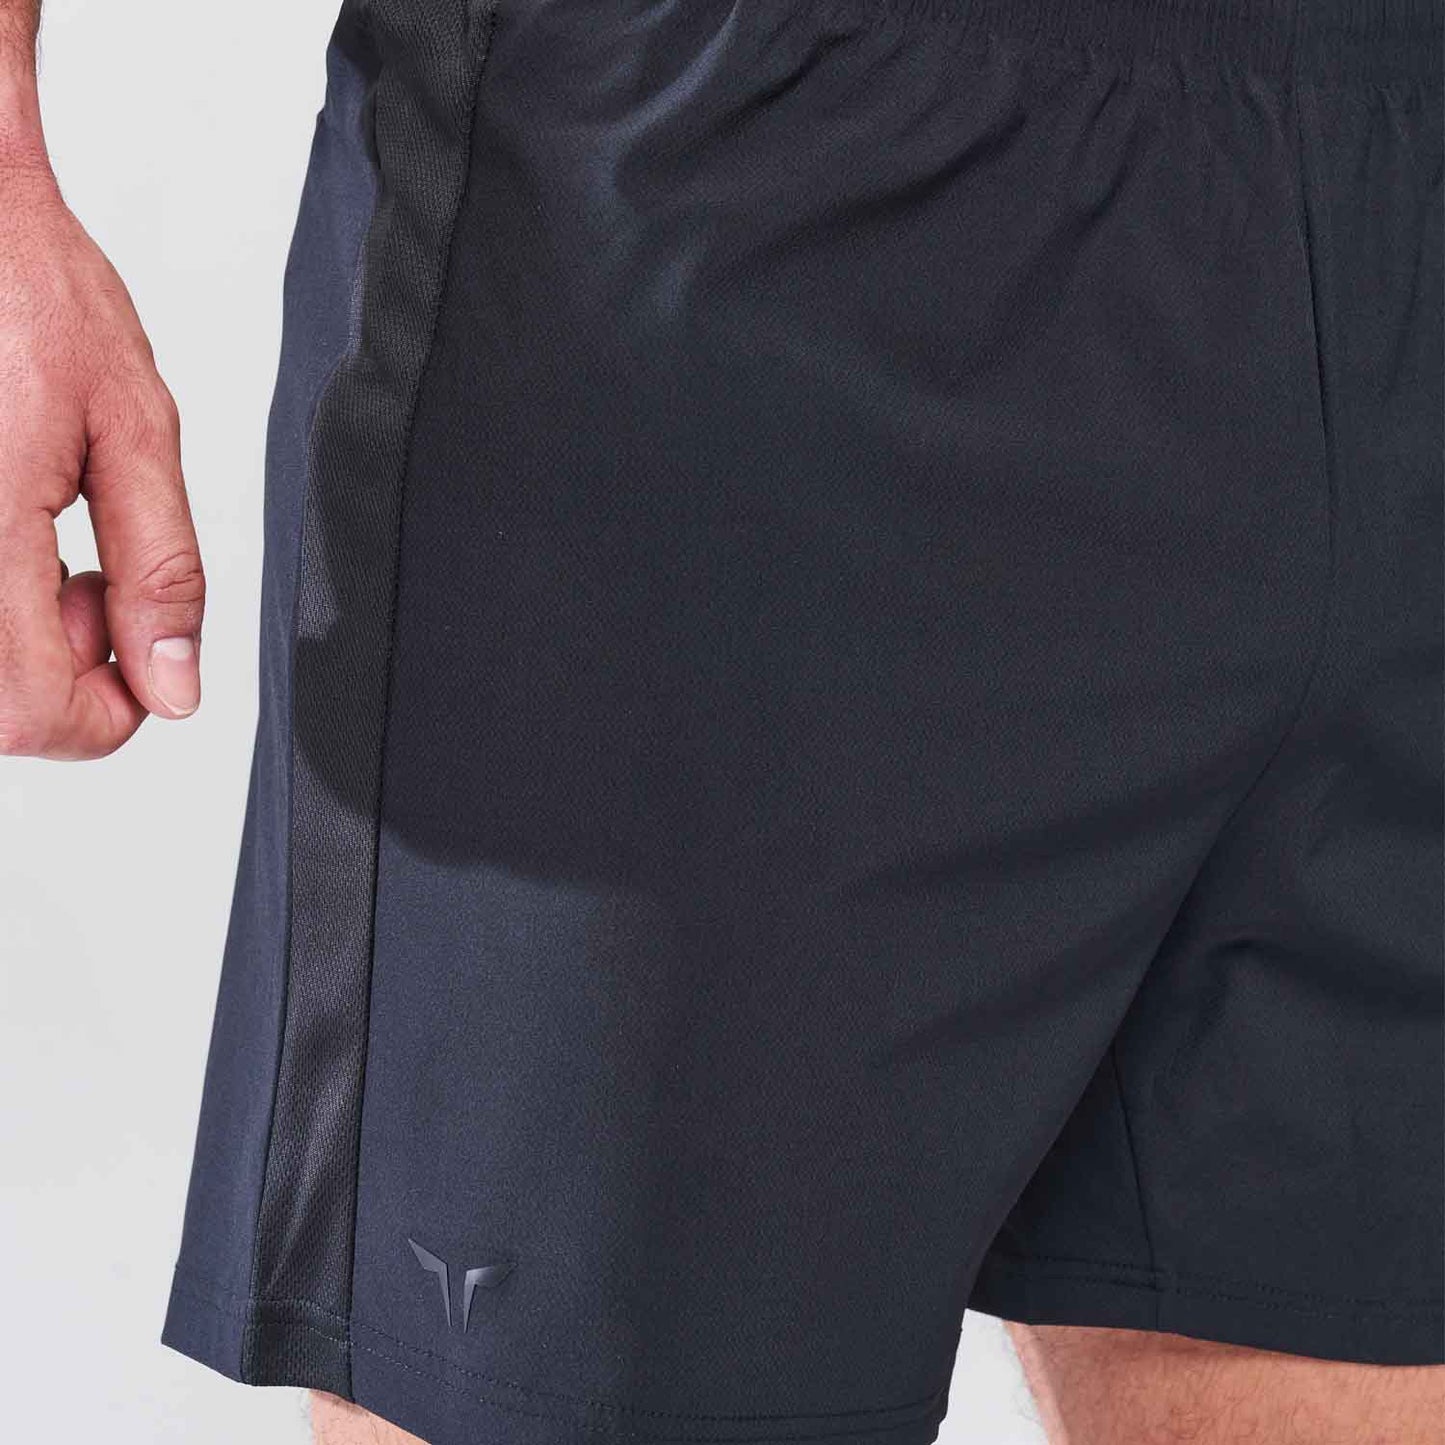 squatwolf-gym-wear-lab-360-6-liner-shorts-black-workout-shorts-for-men